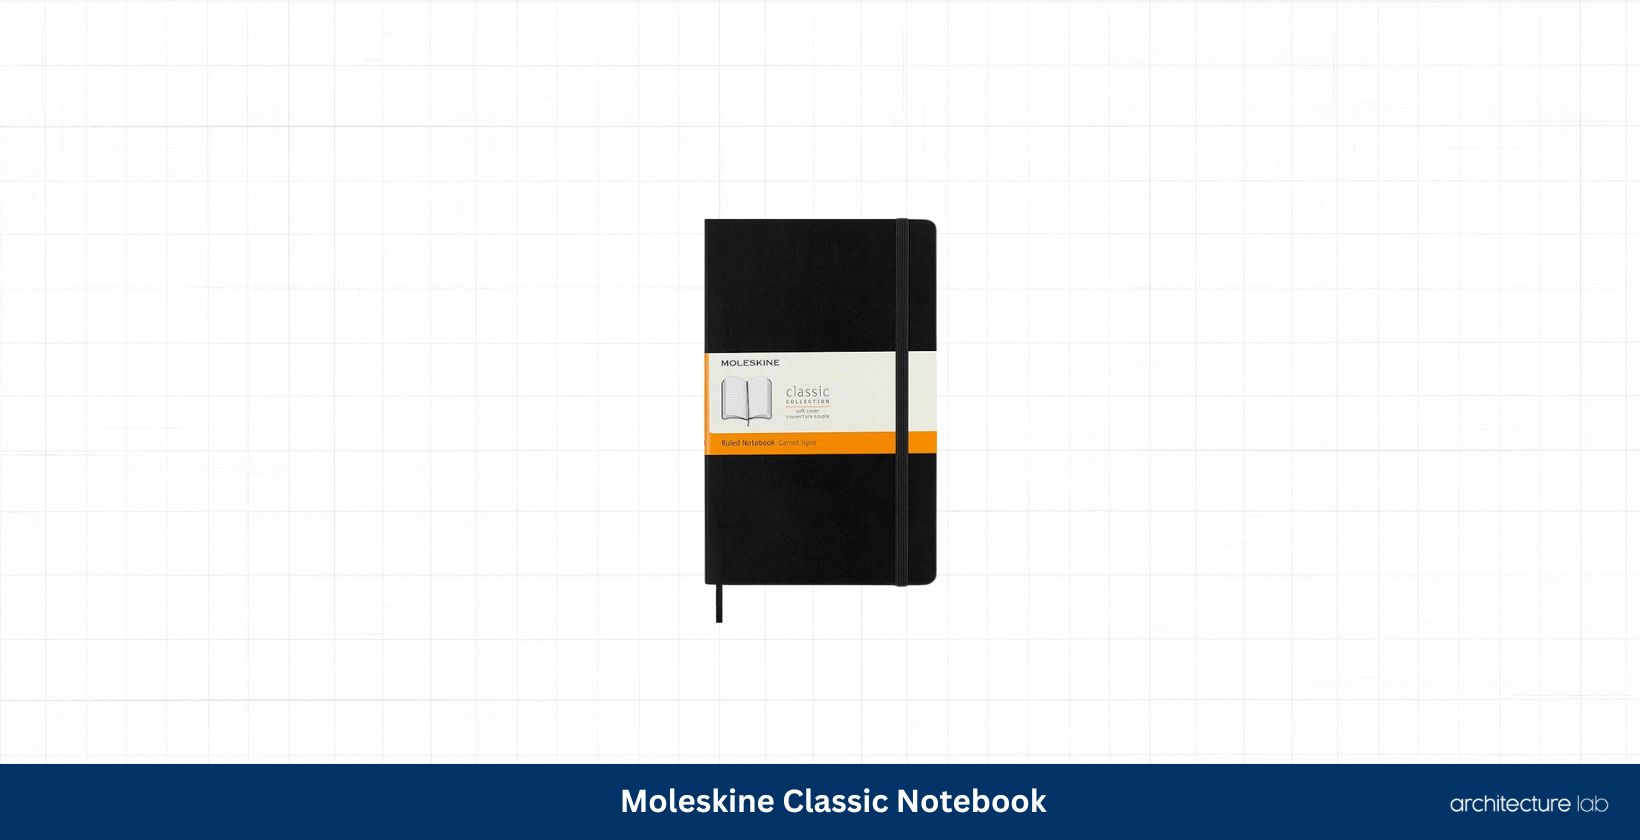 Moleskine classic notebook